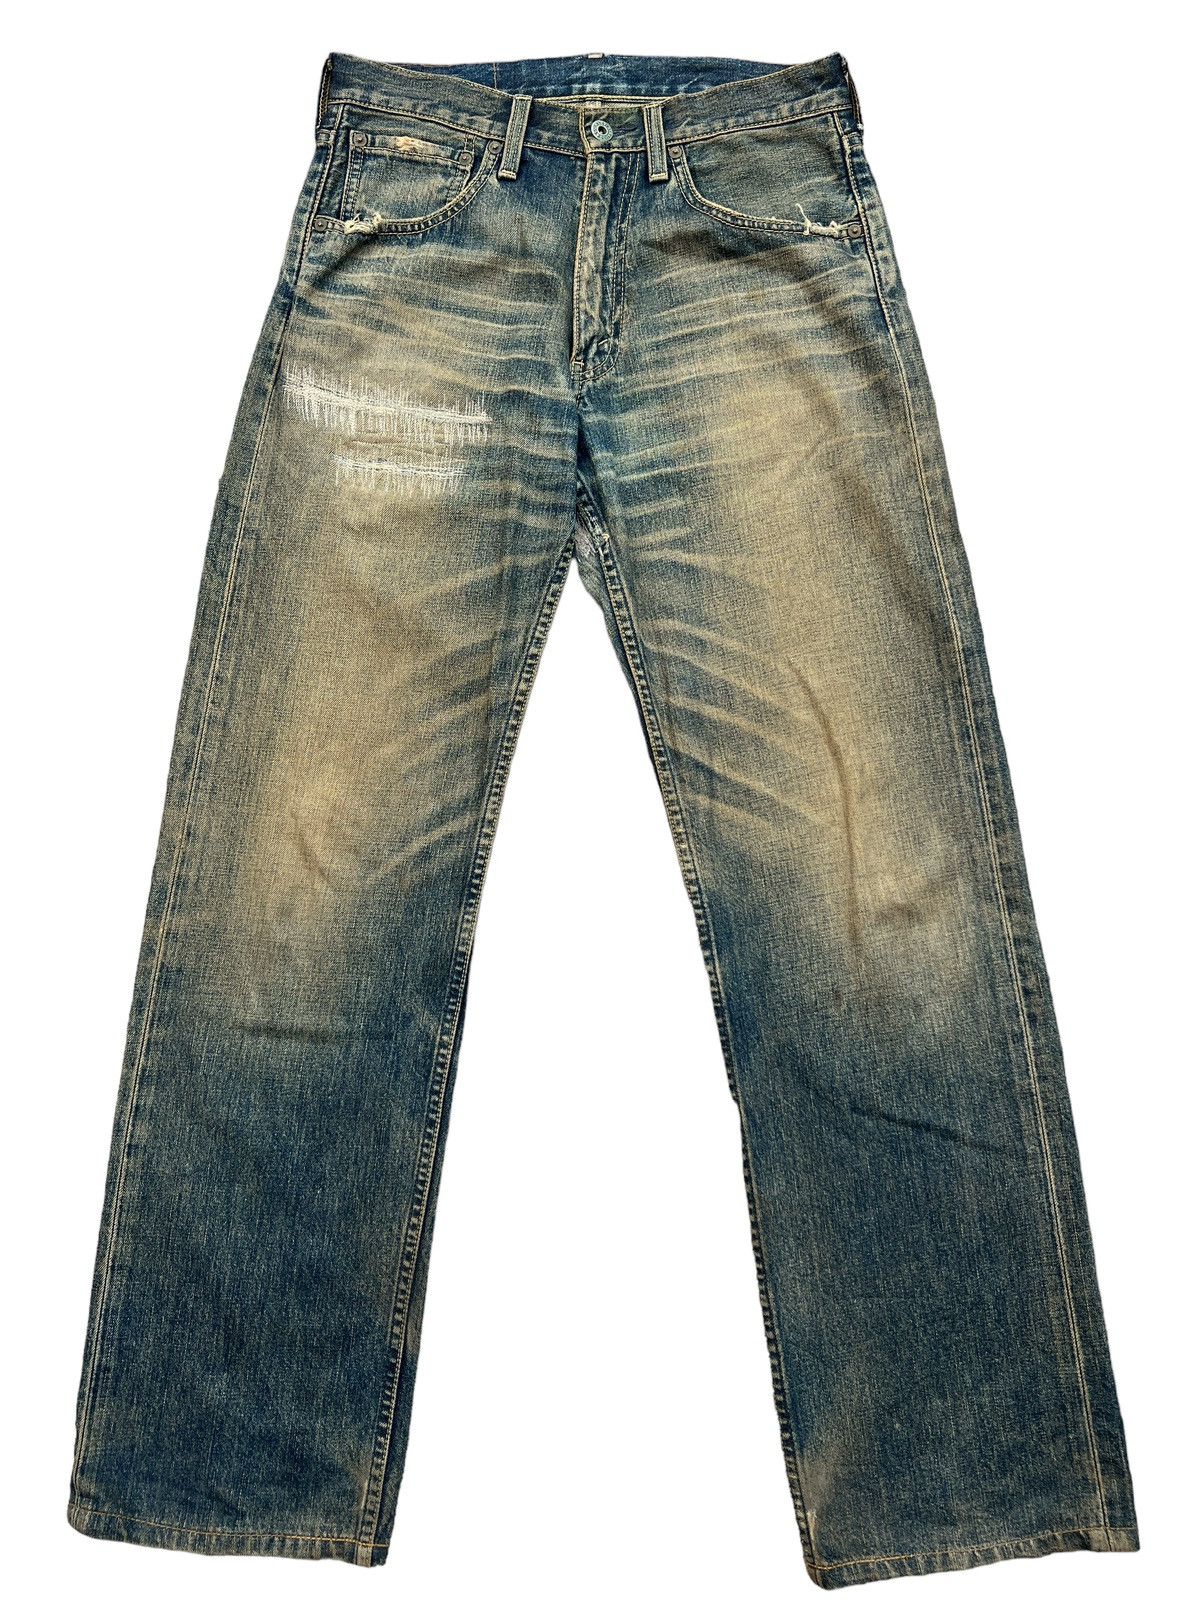 Vintage Levi’s 503 Distressed Rusty Denim Jeans 30x32 - 2